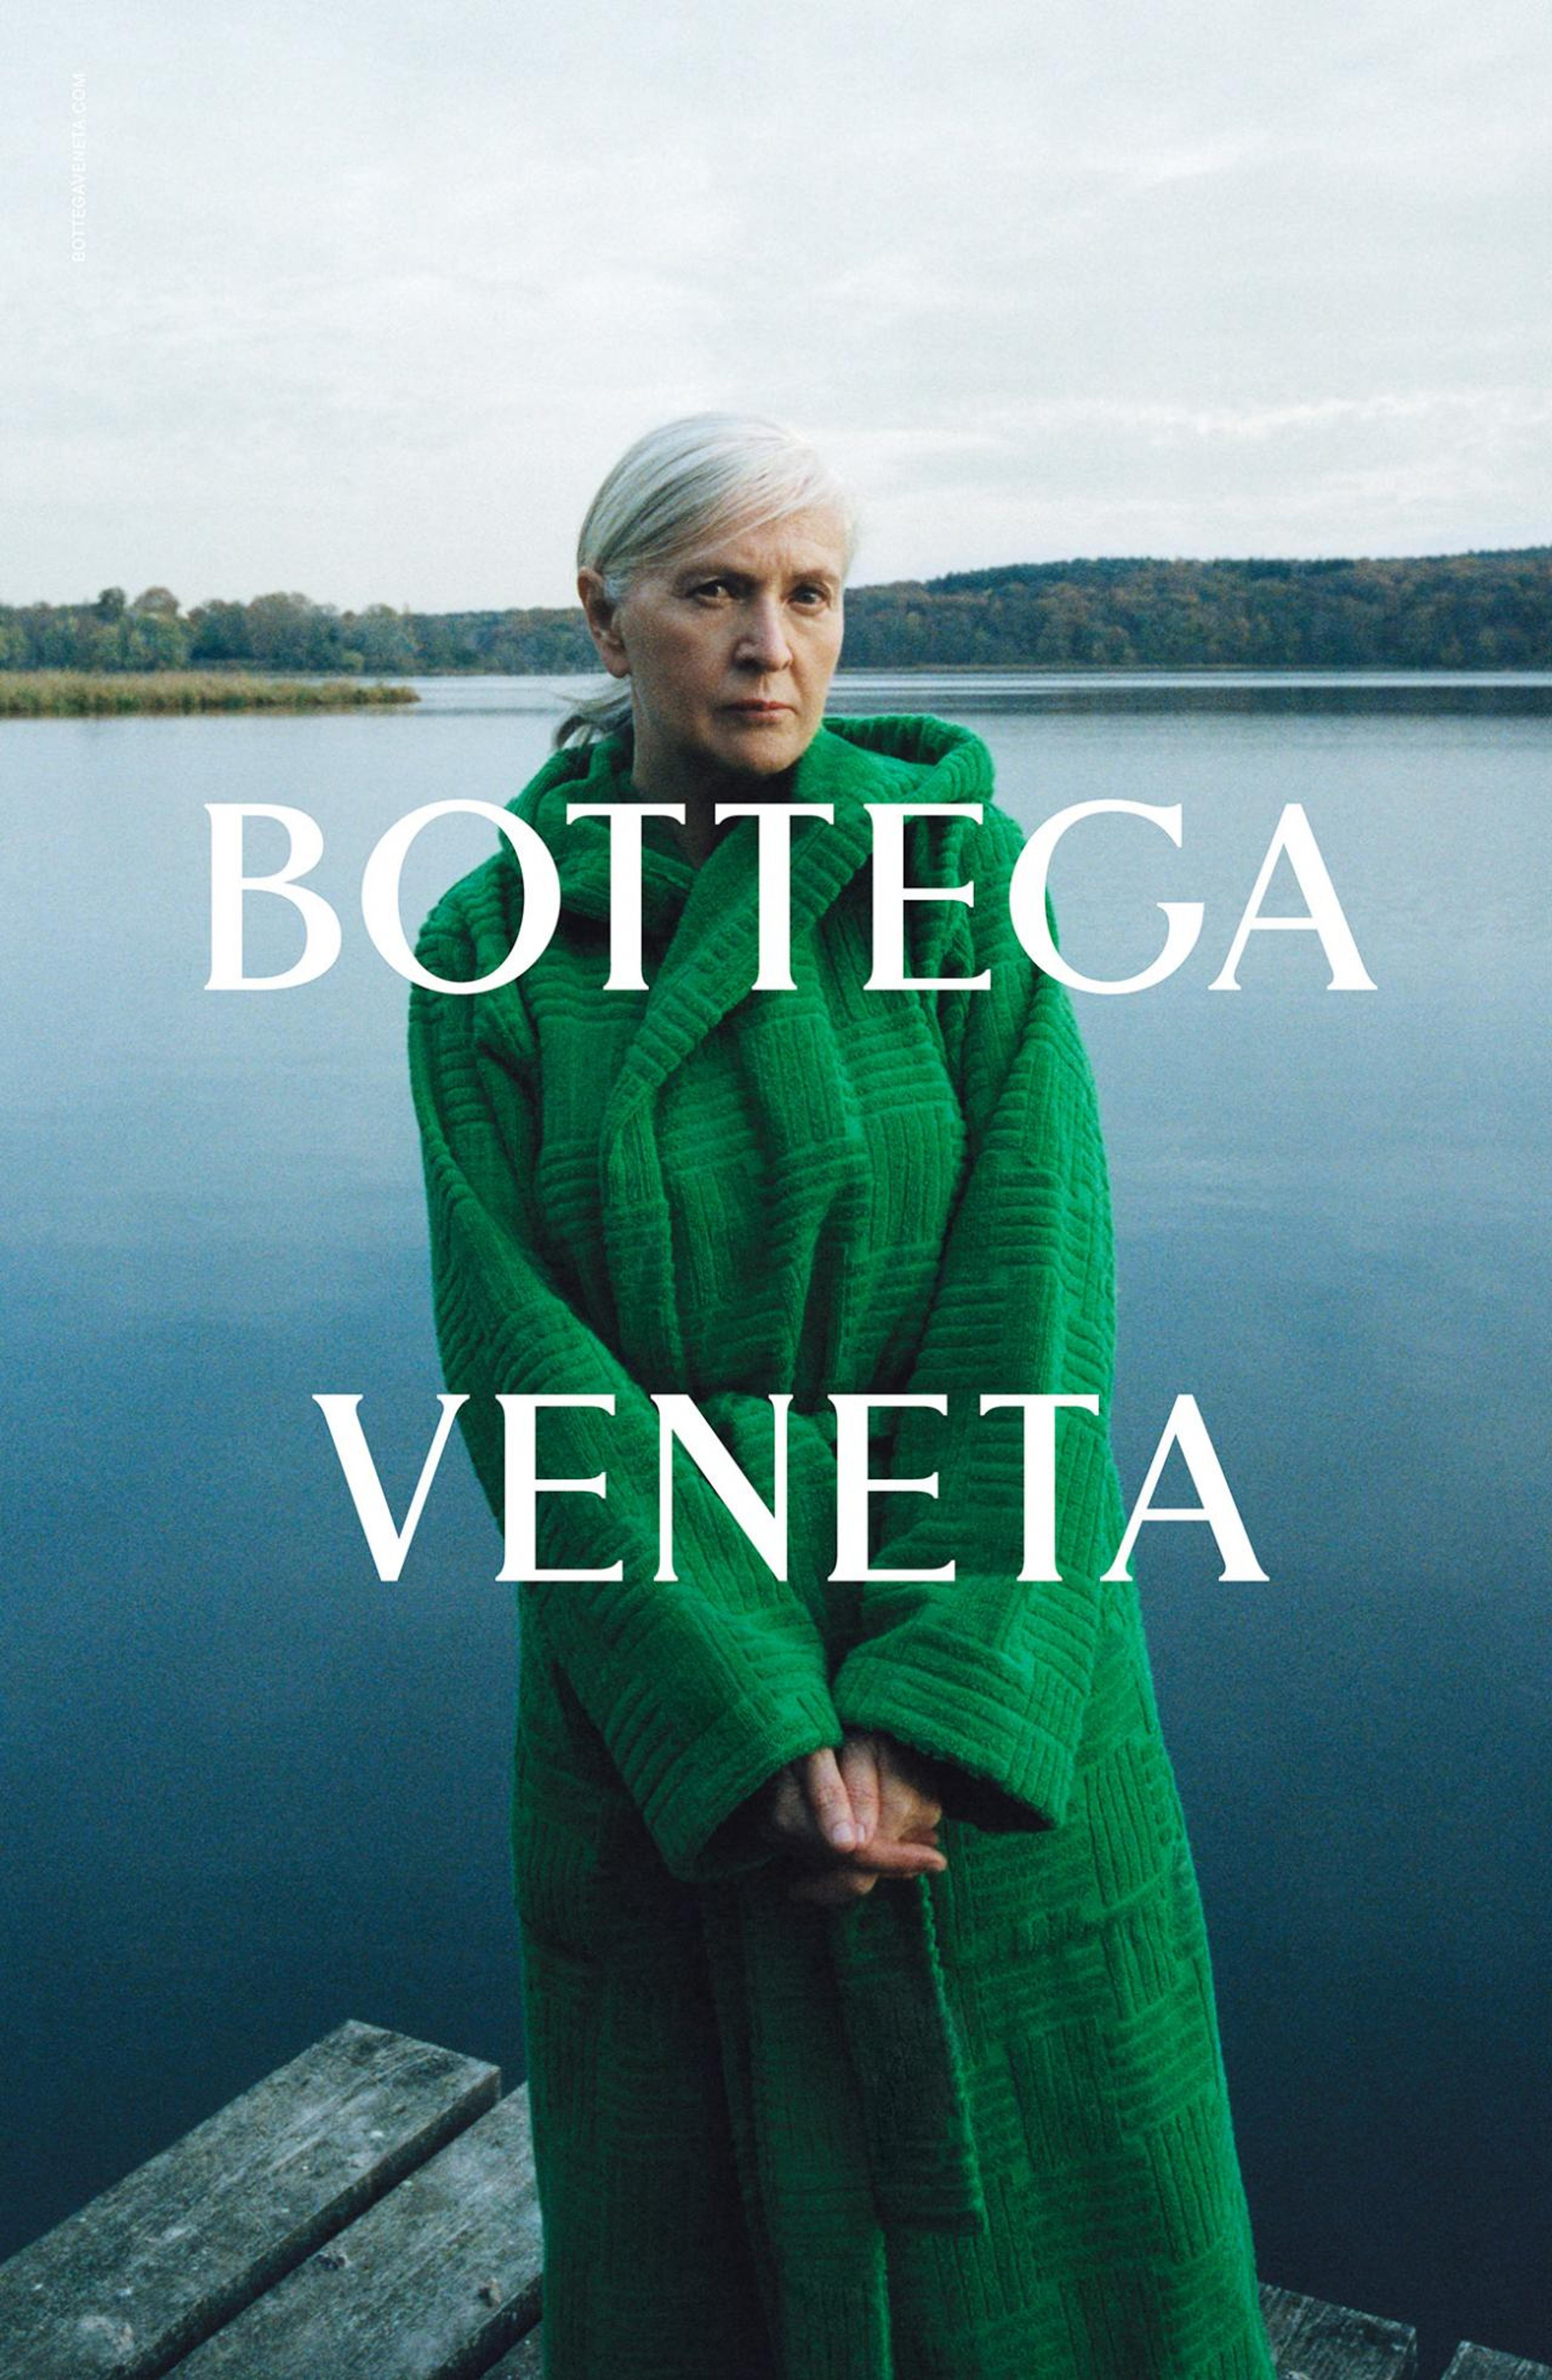 BOTTEGA VENETA Salon 01 Campaign Artist Rosemarie Trockel, photographed by Tyrone Lebon